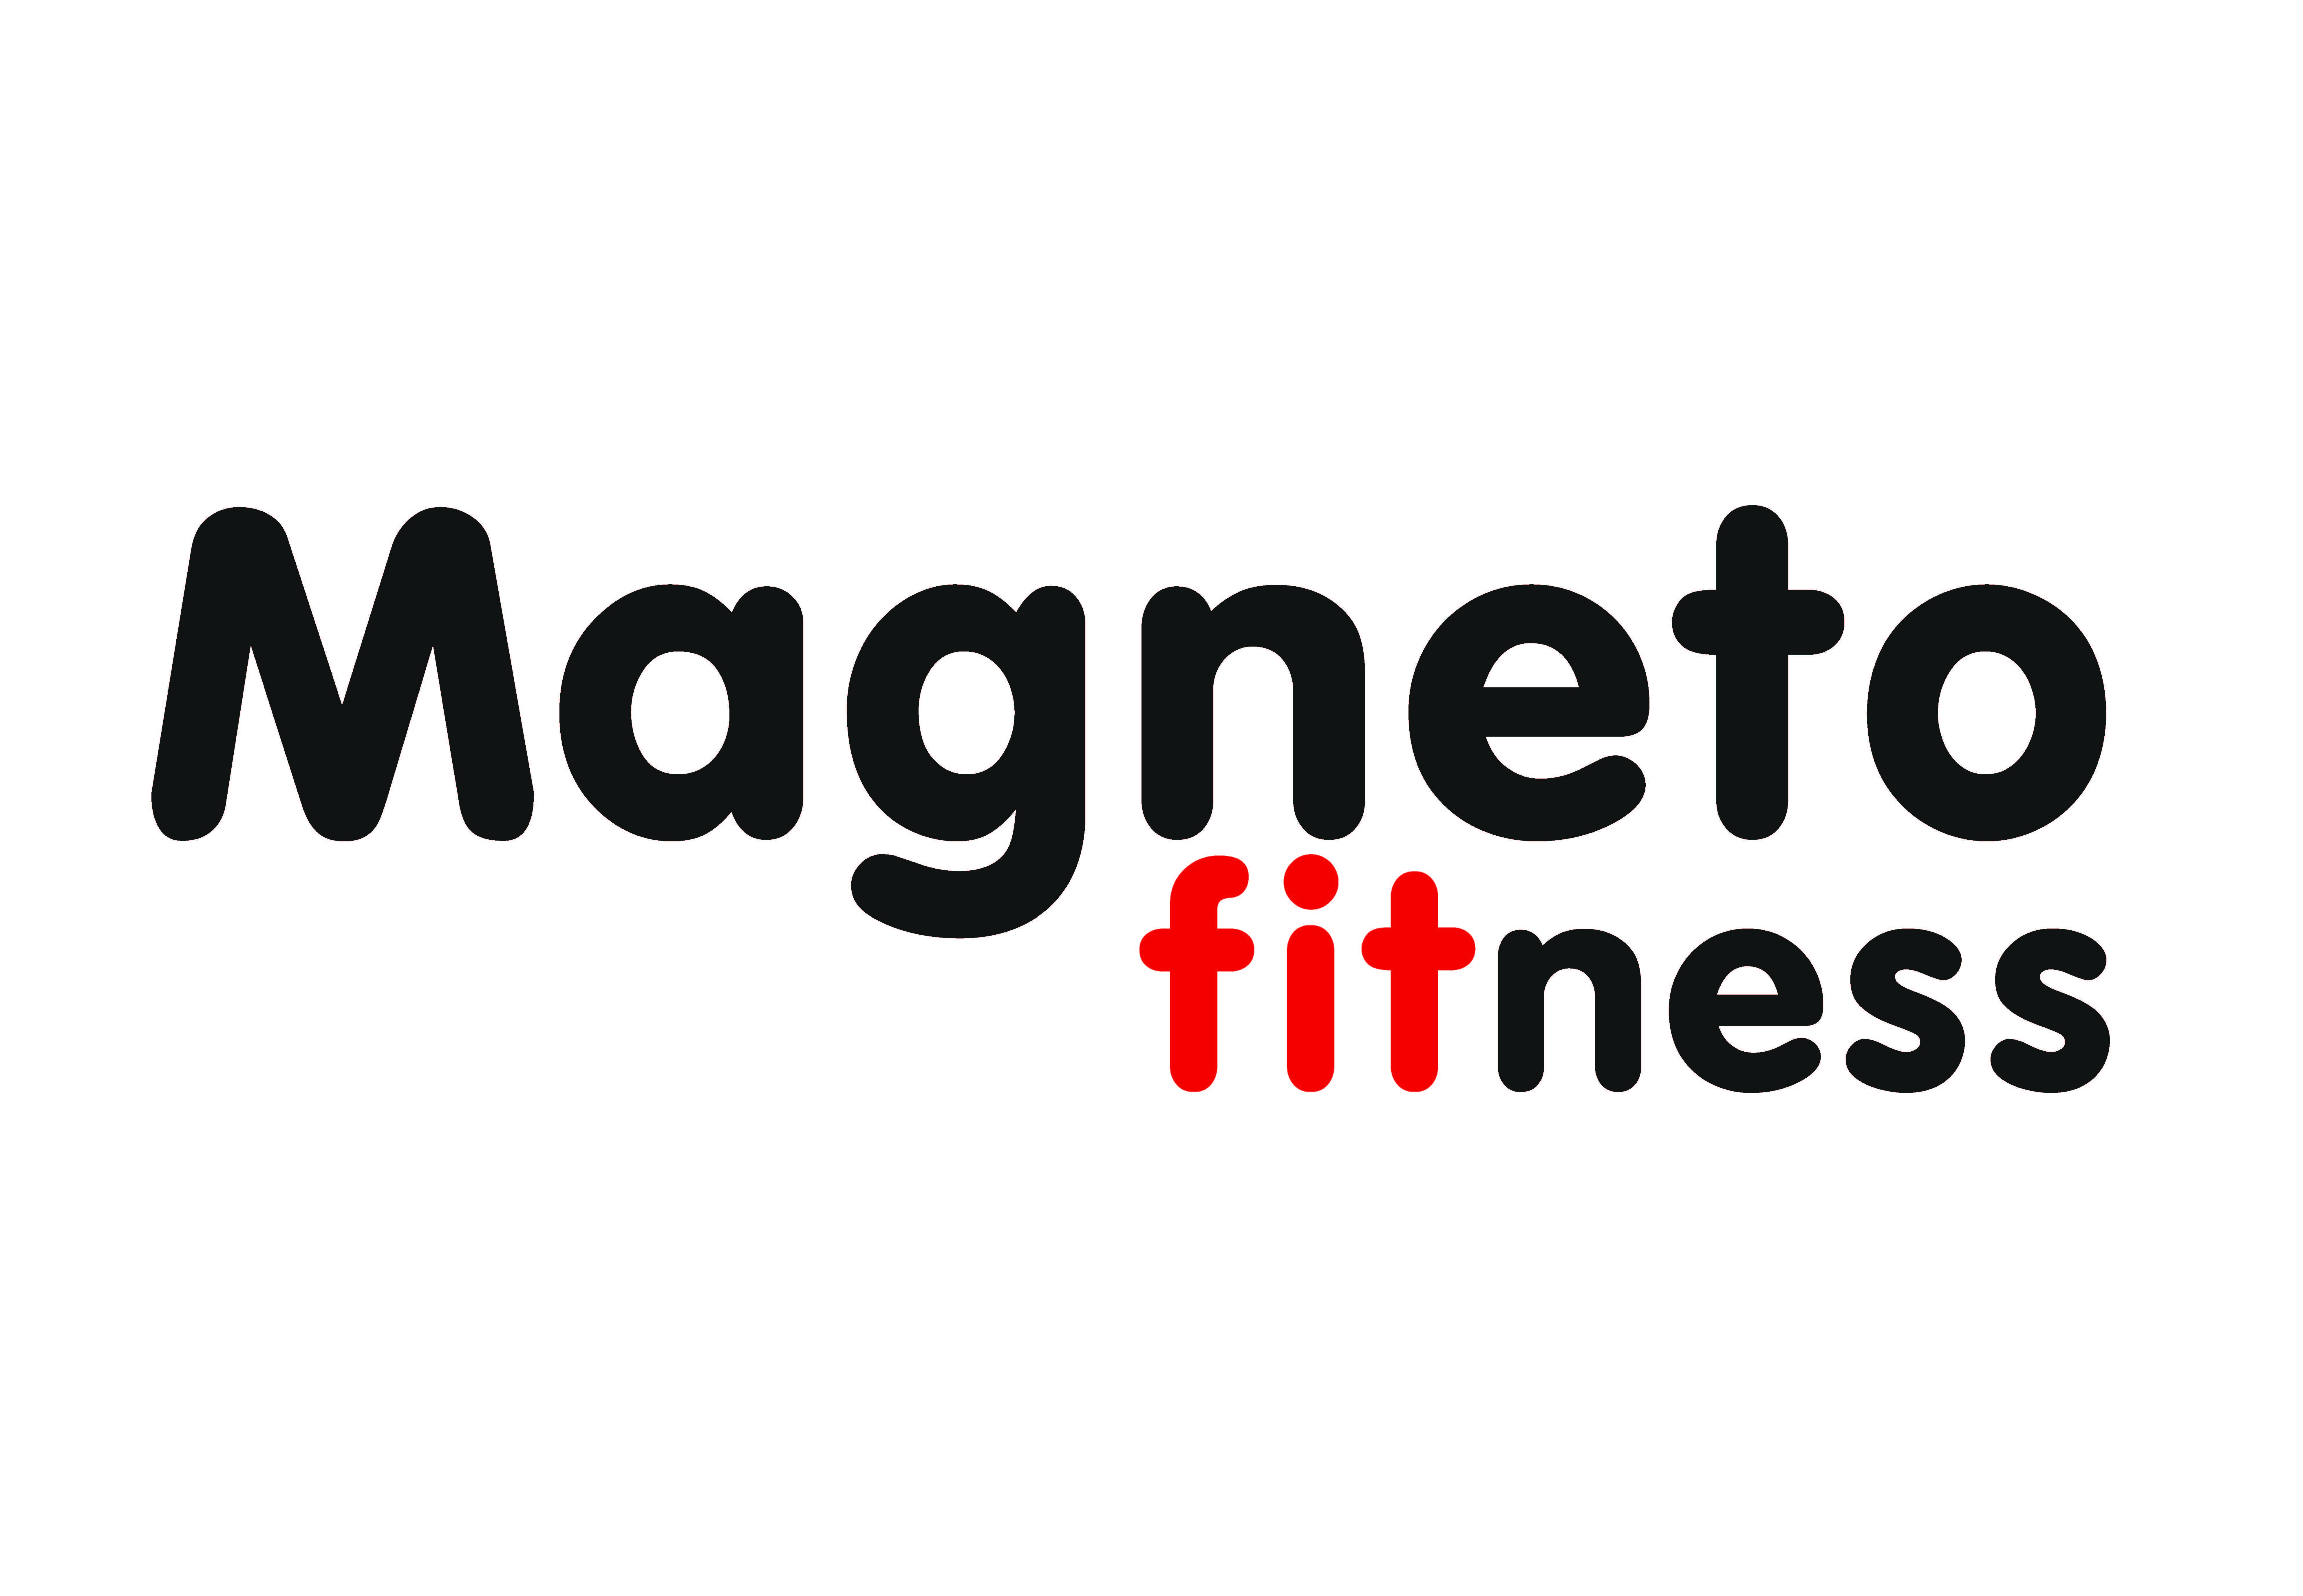 Magneto Fitness